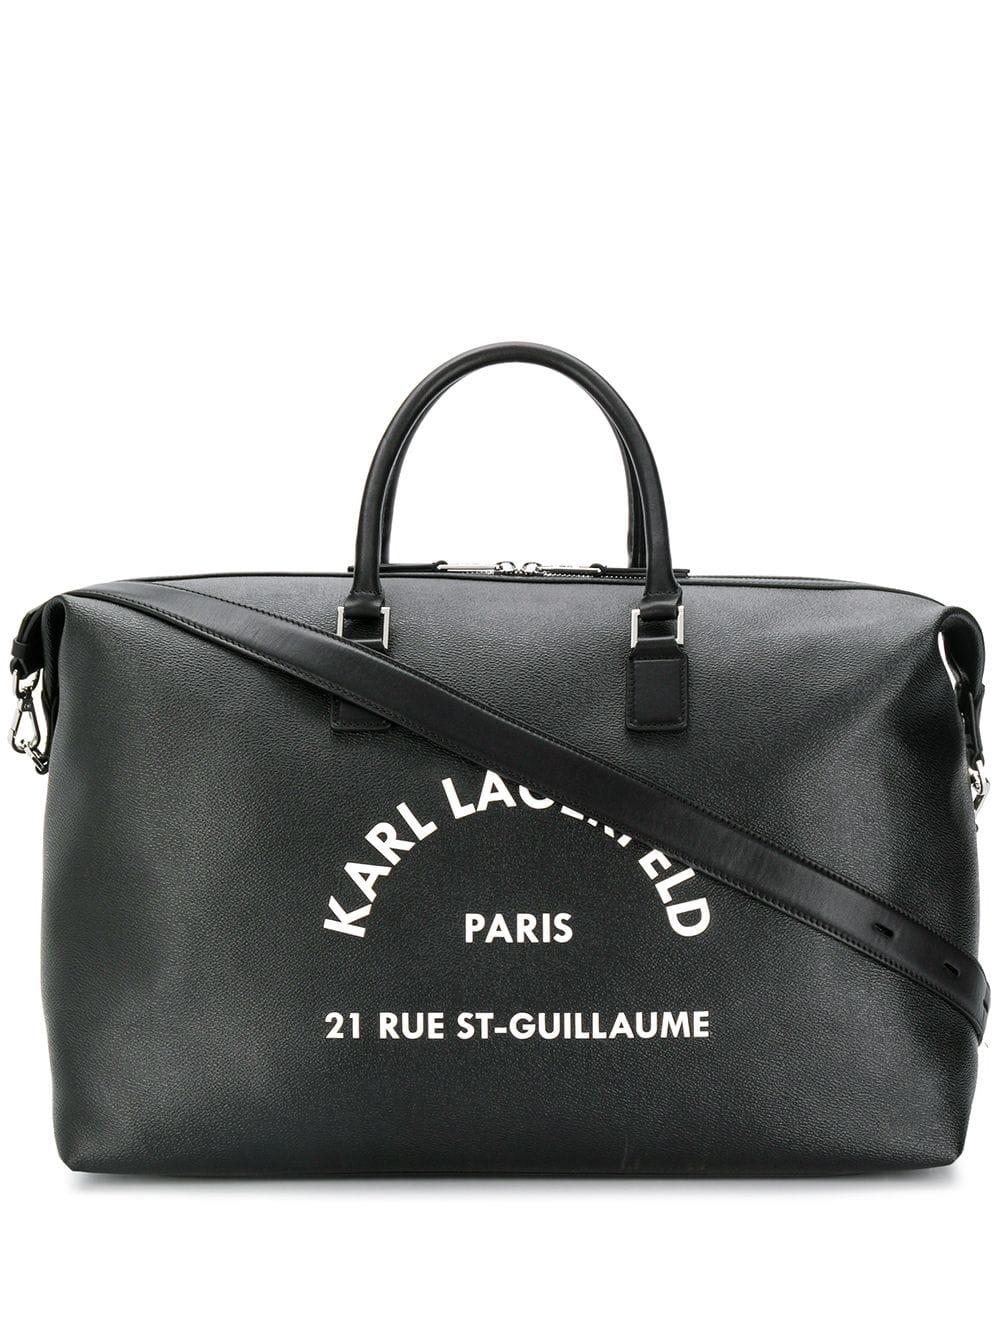 Karl Lagerfeld Rue St Guillaume Weekend Bag in Black - Lyst